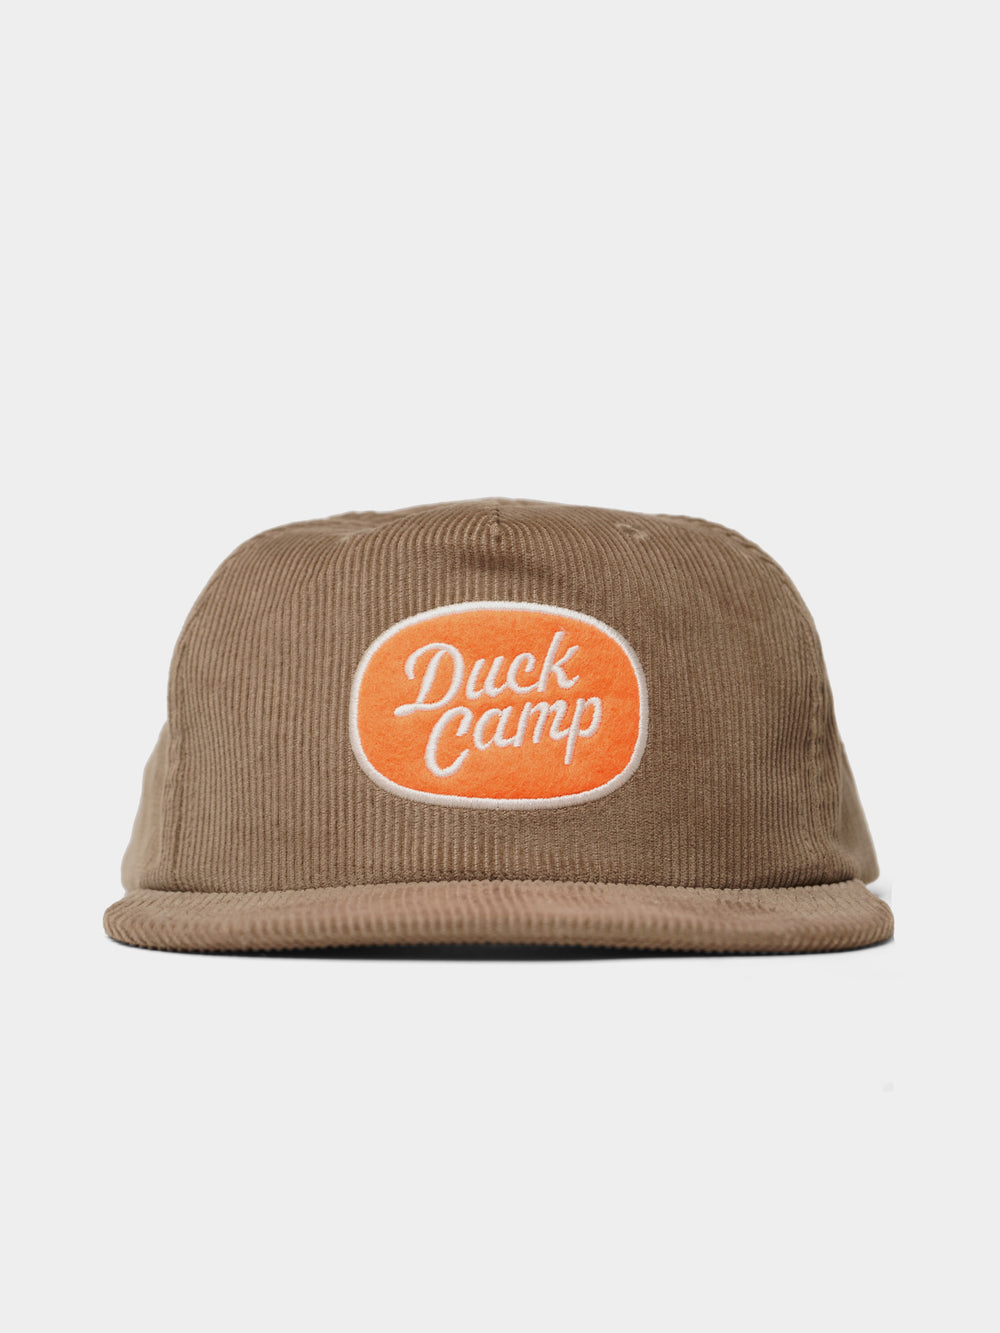 Duck Camp Oval Corduroy Cap - Sagebrush